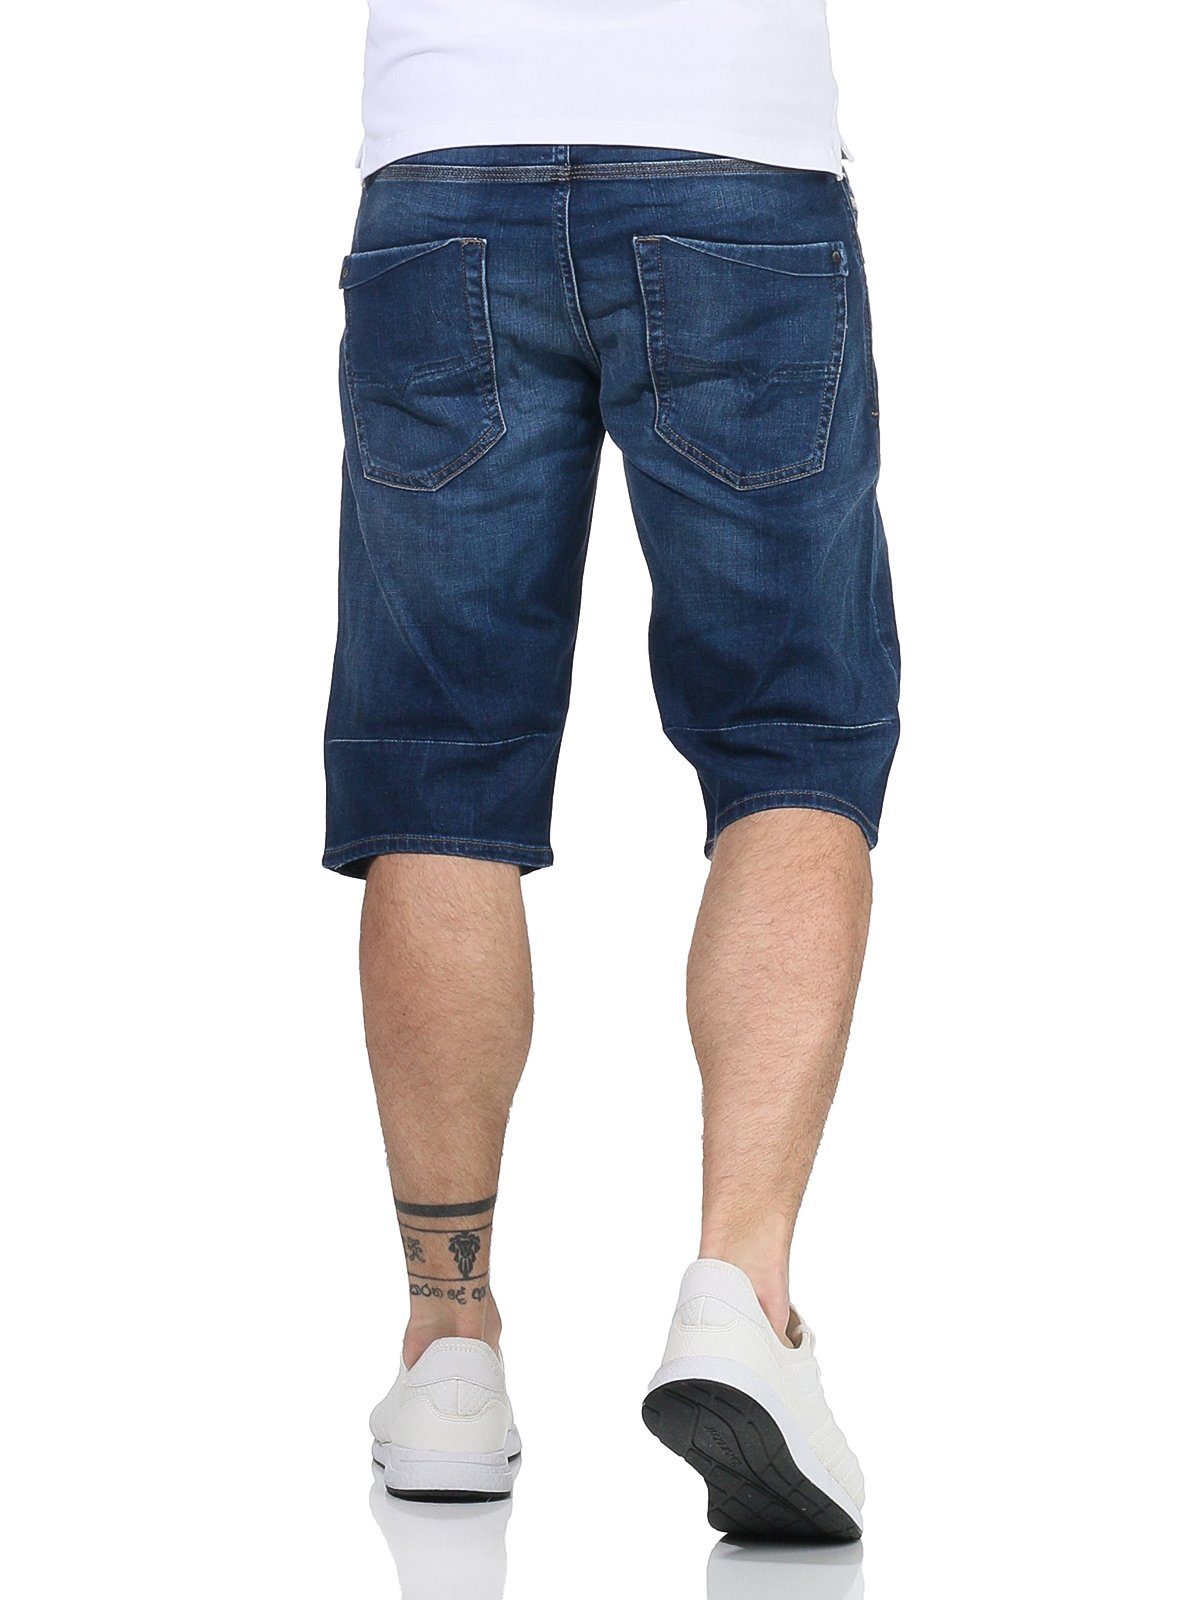 RG48R Kroshort Shorts Herren Blau kurze Jeansshorts Hose RG48R Used-Look Jeans Diesel dezenter Shorts,